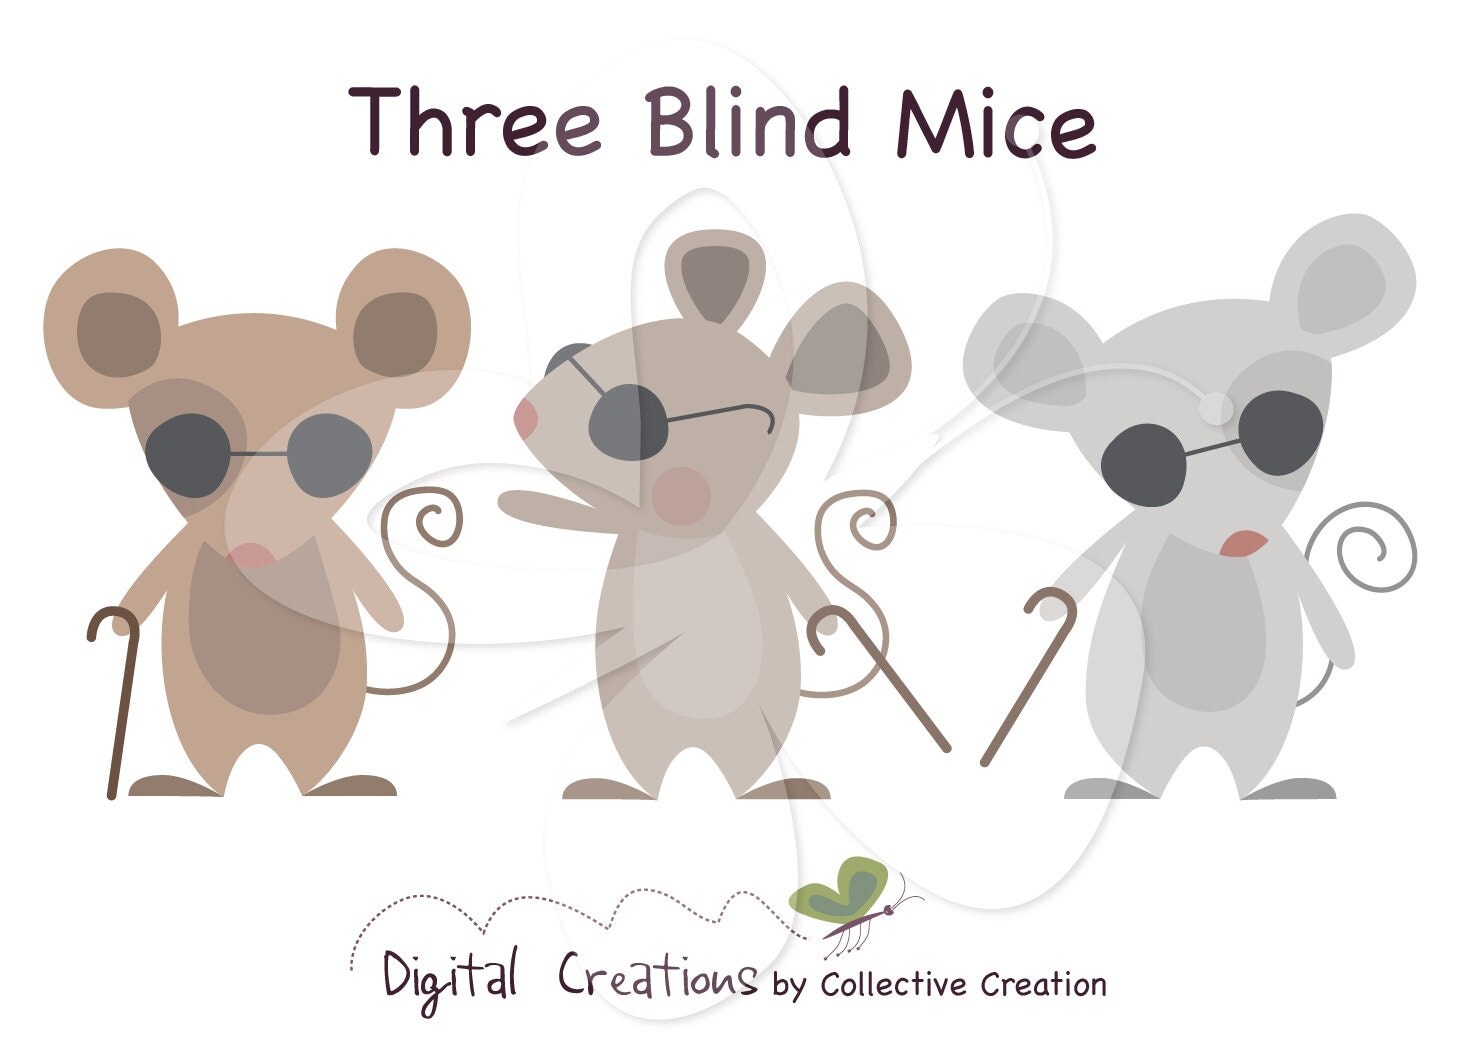 Three mice. Три слепых мышонка. Three Blind Mice - три слепых мышонка. Три слепых мыши паттерн. 3 Мыши арт.